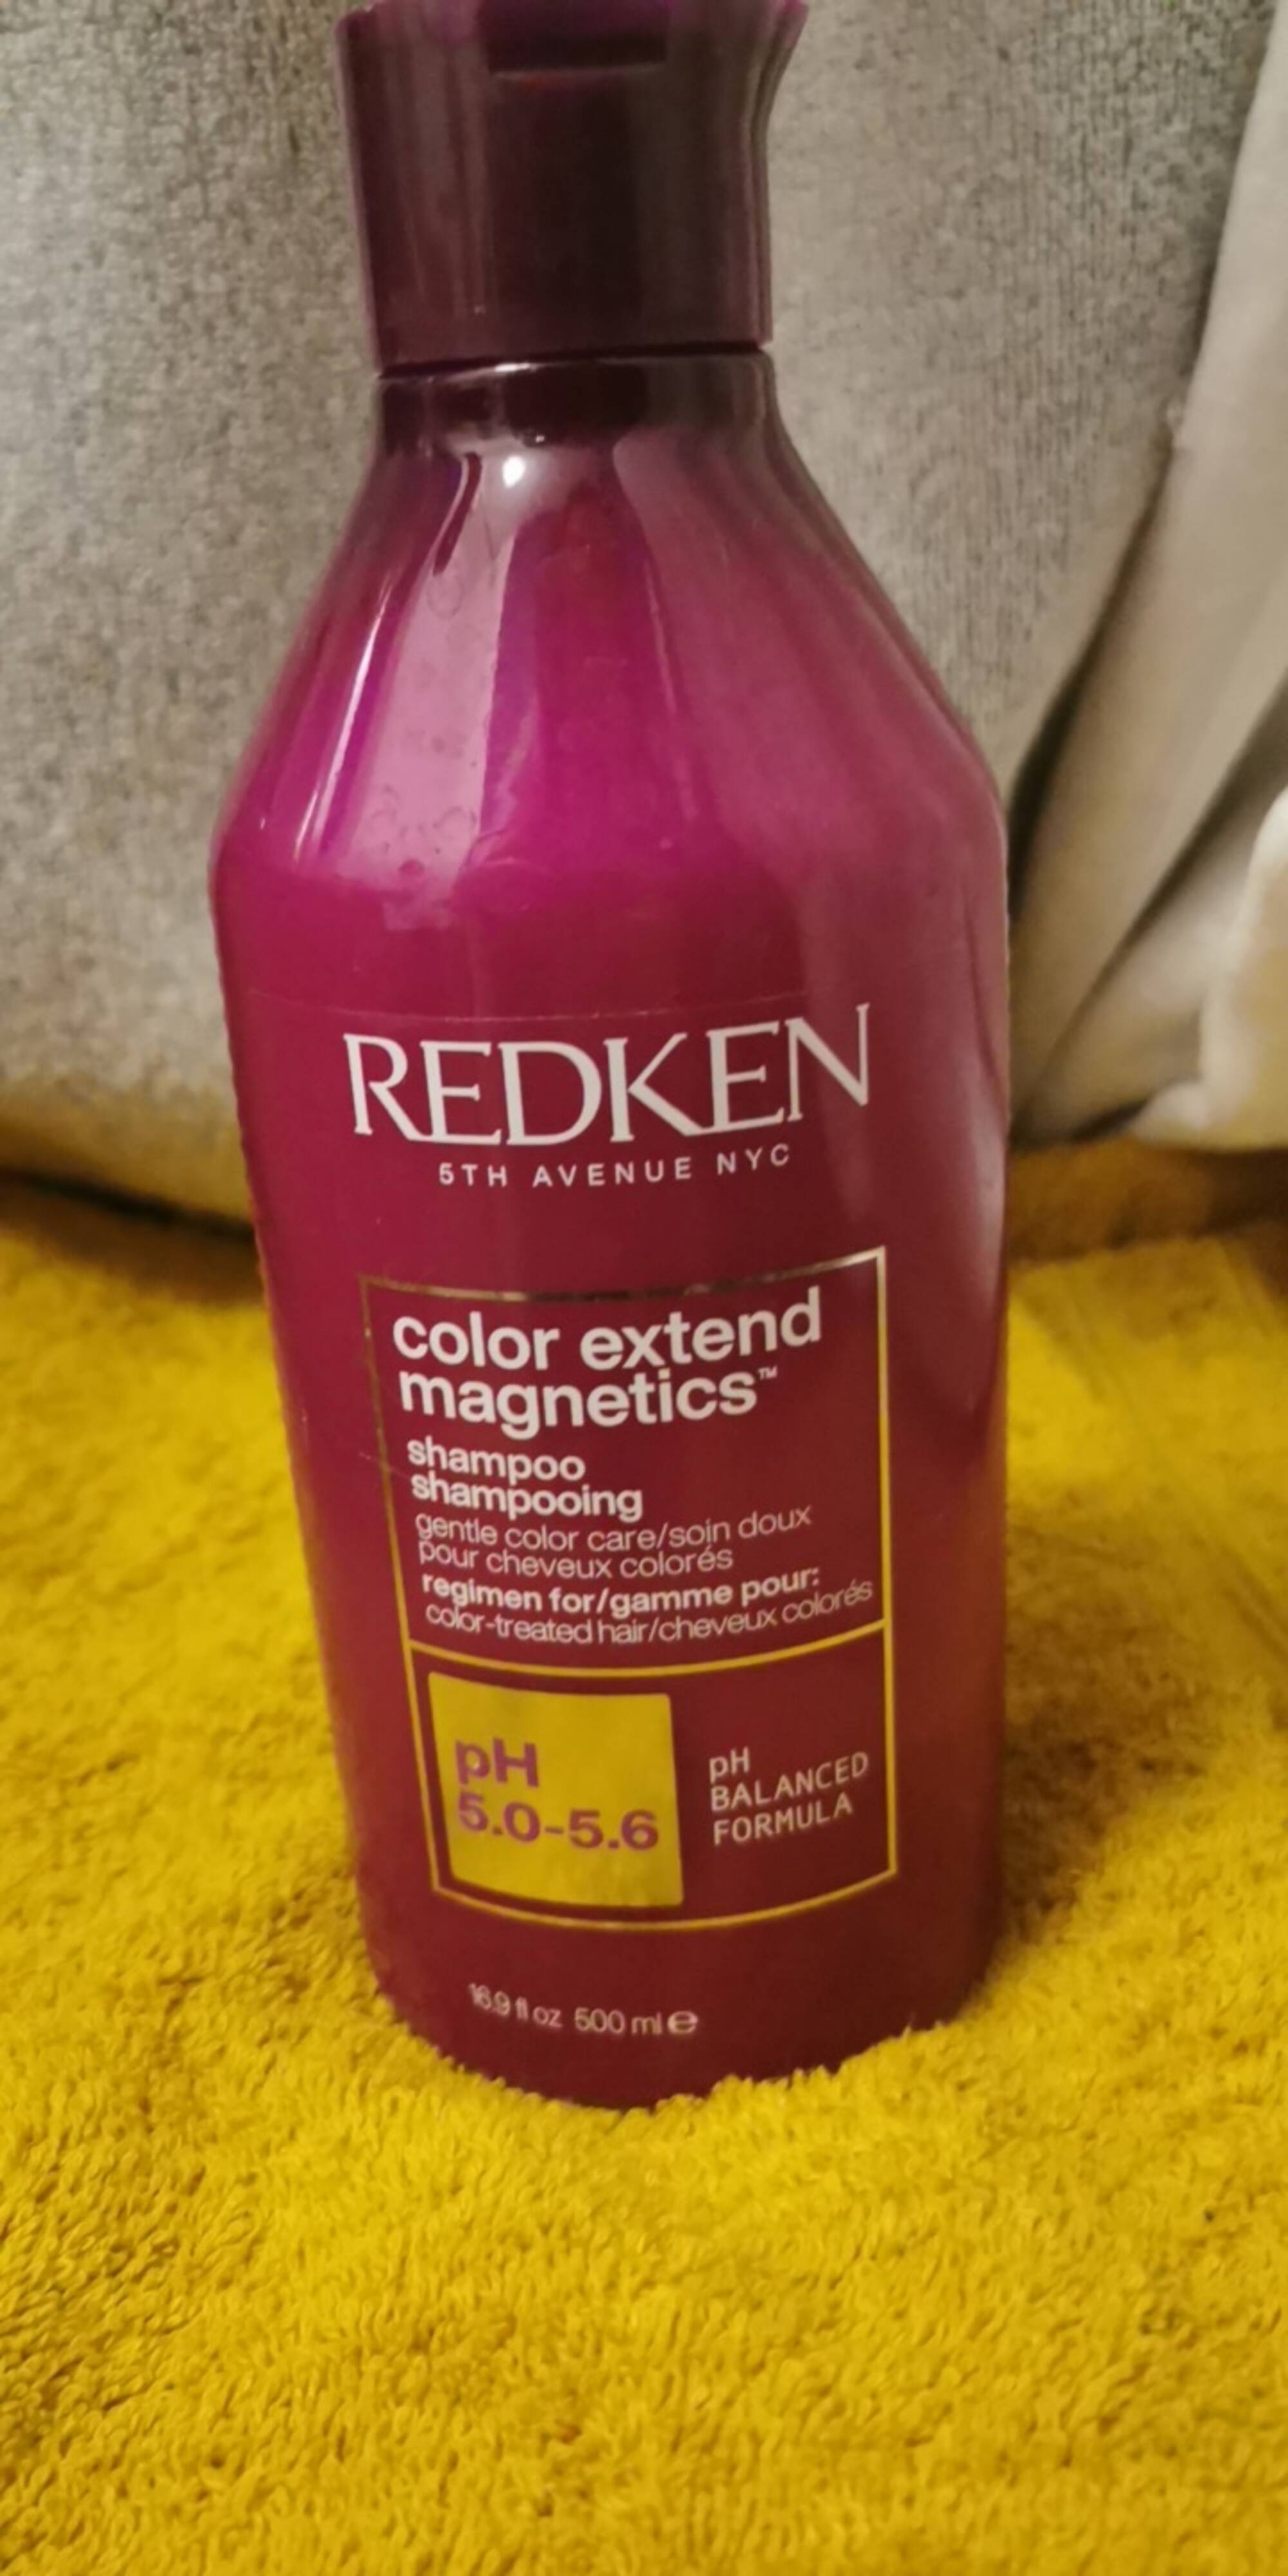 REDKEN - Color extend magnetics - Shampooing